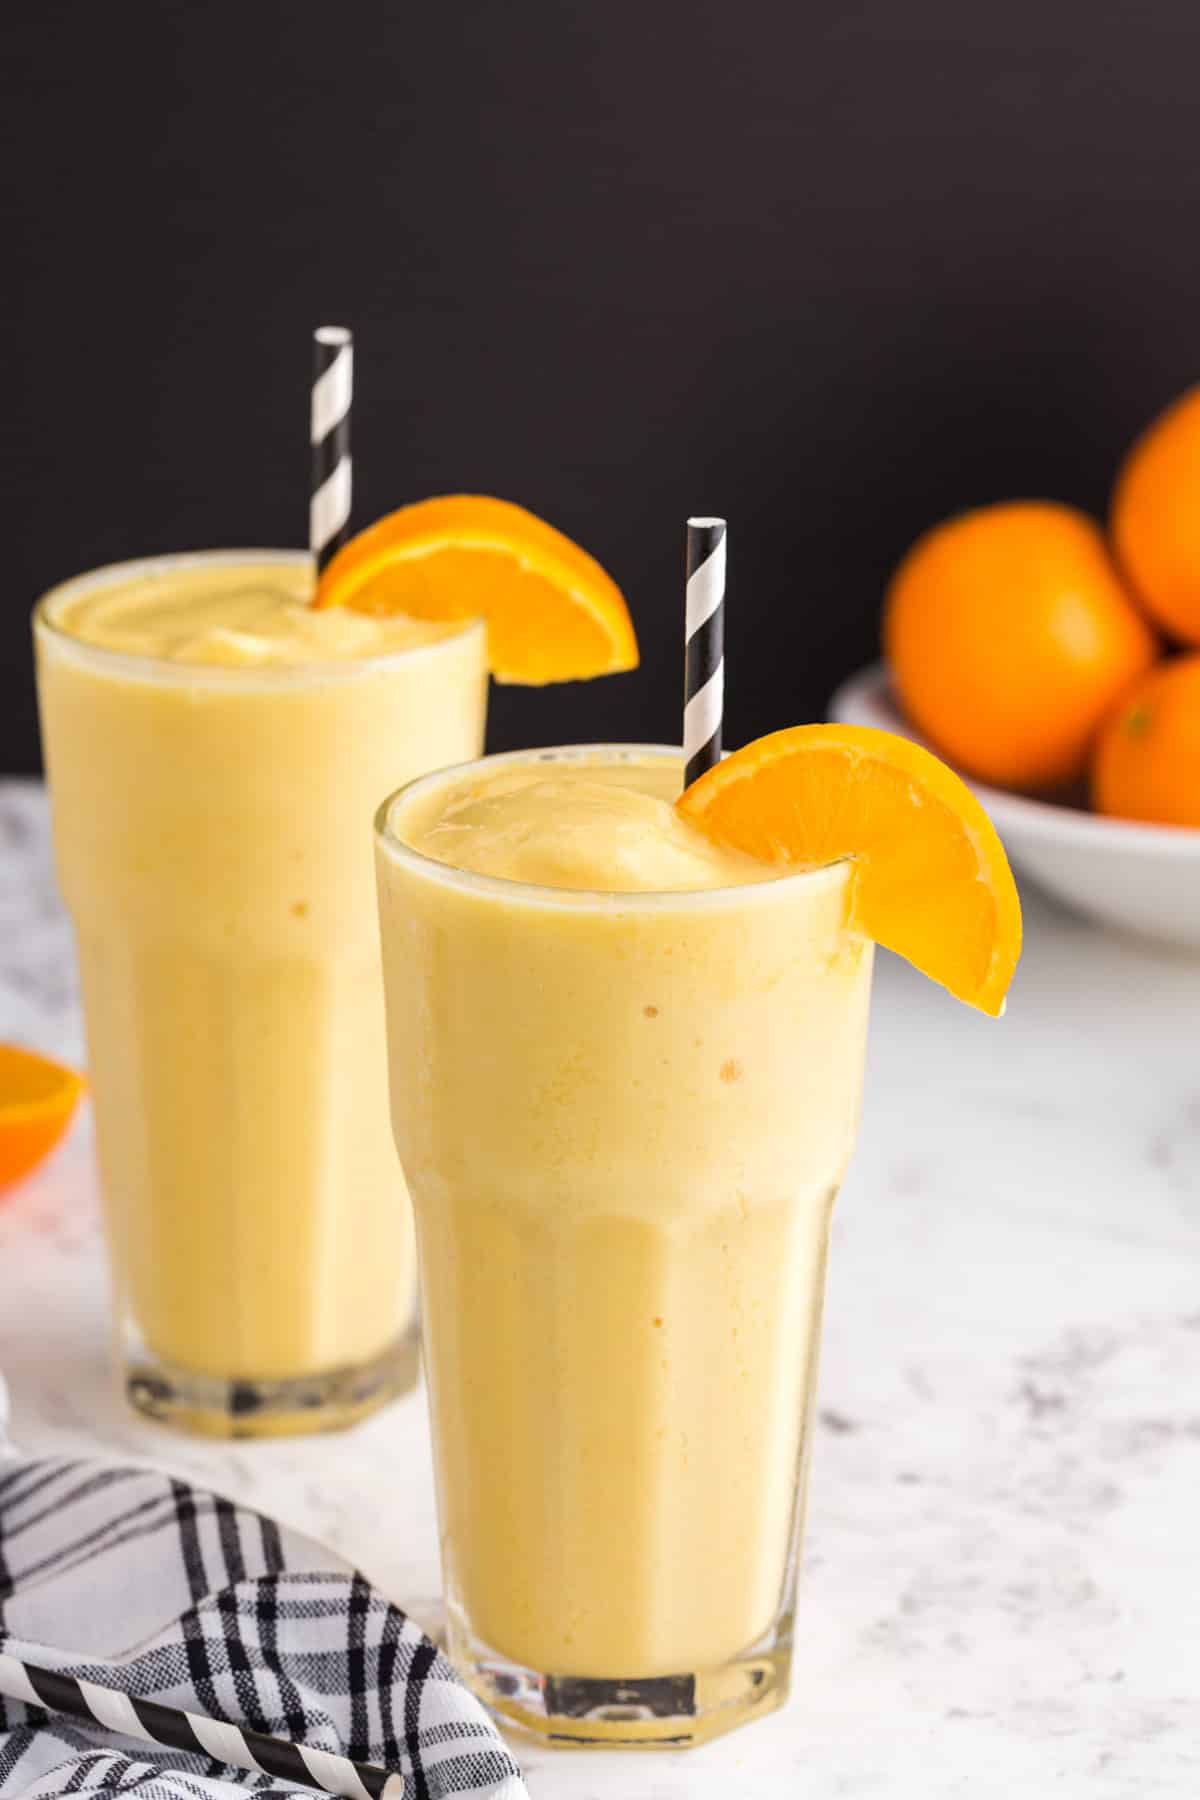 Two glasses of Orange Julius recipe with orange wedge garnish and decorative straws.